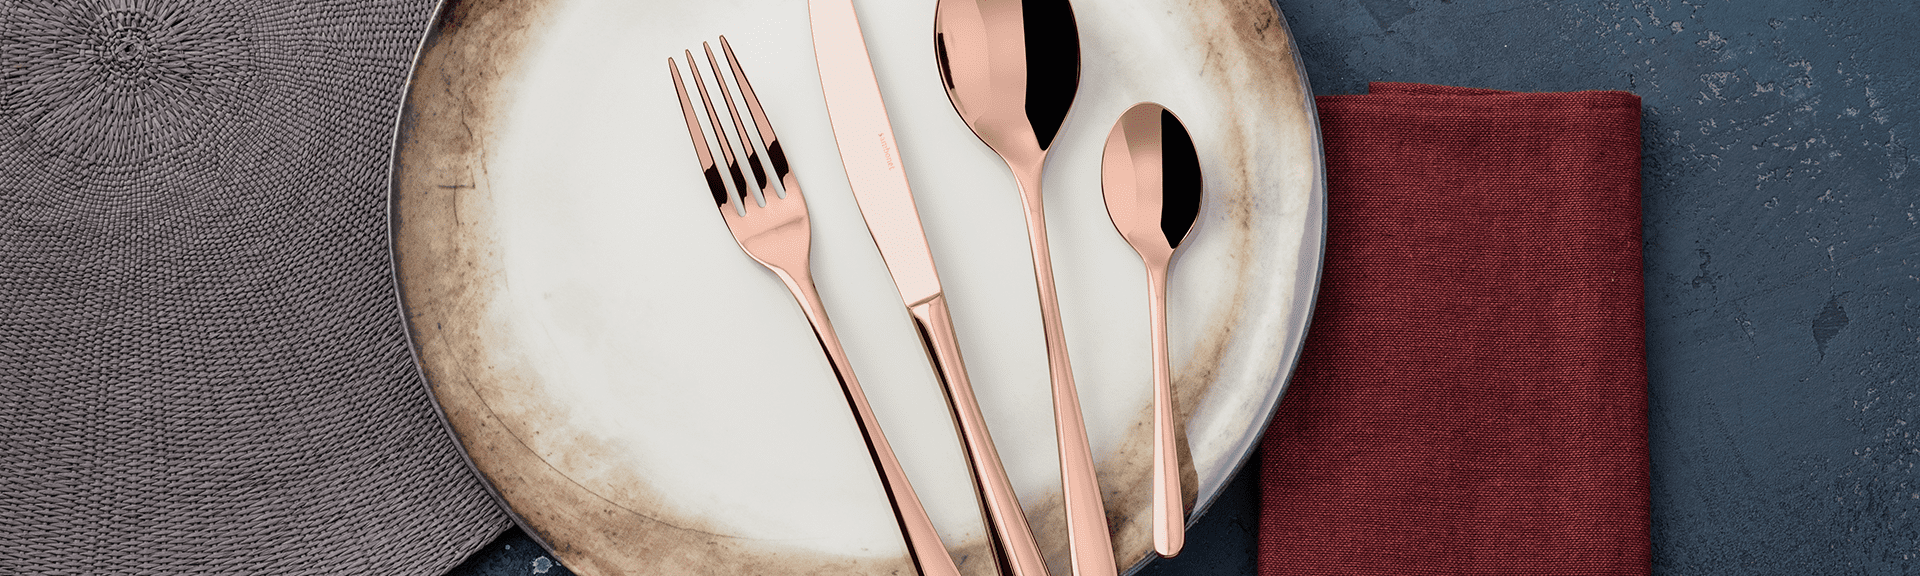 Copper cutlery